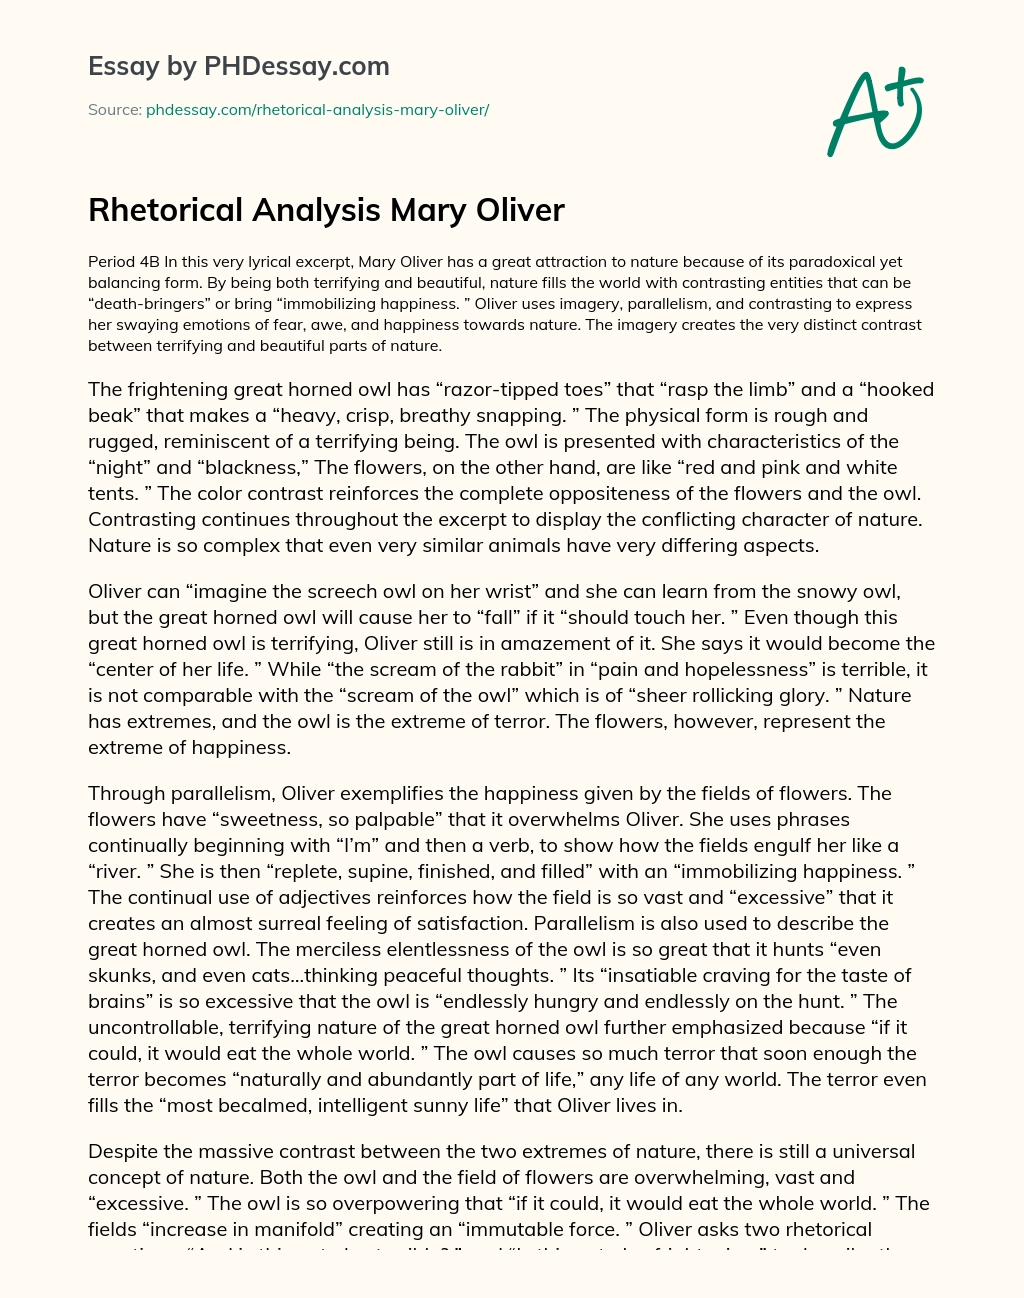 Rhetorical Analysis Mary Oliver